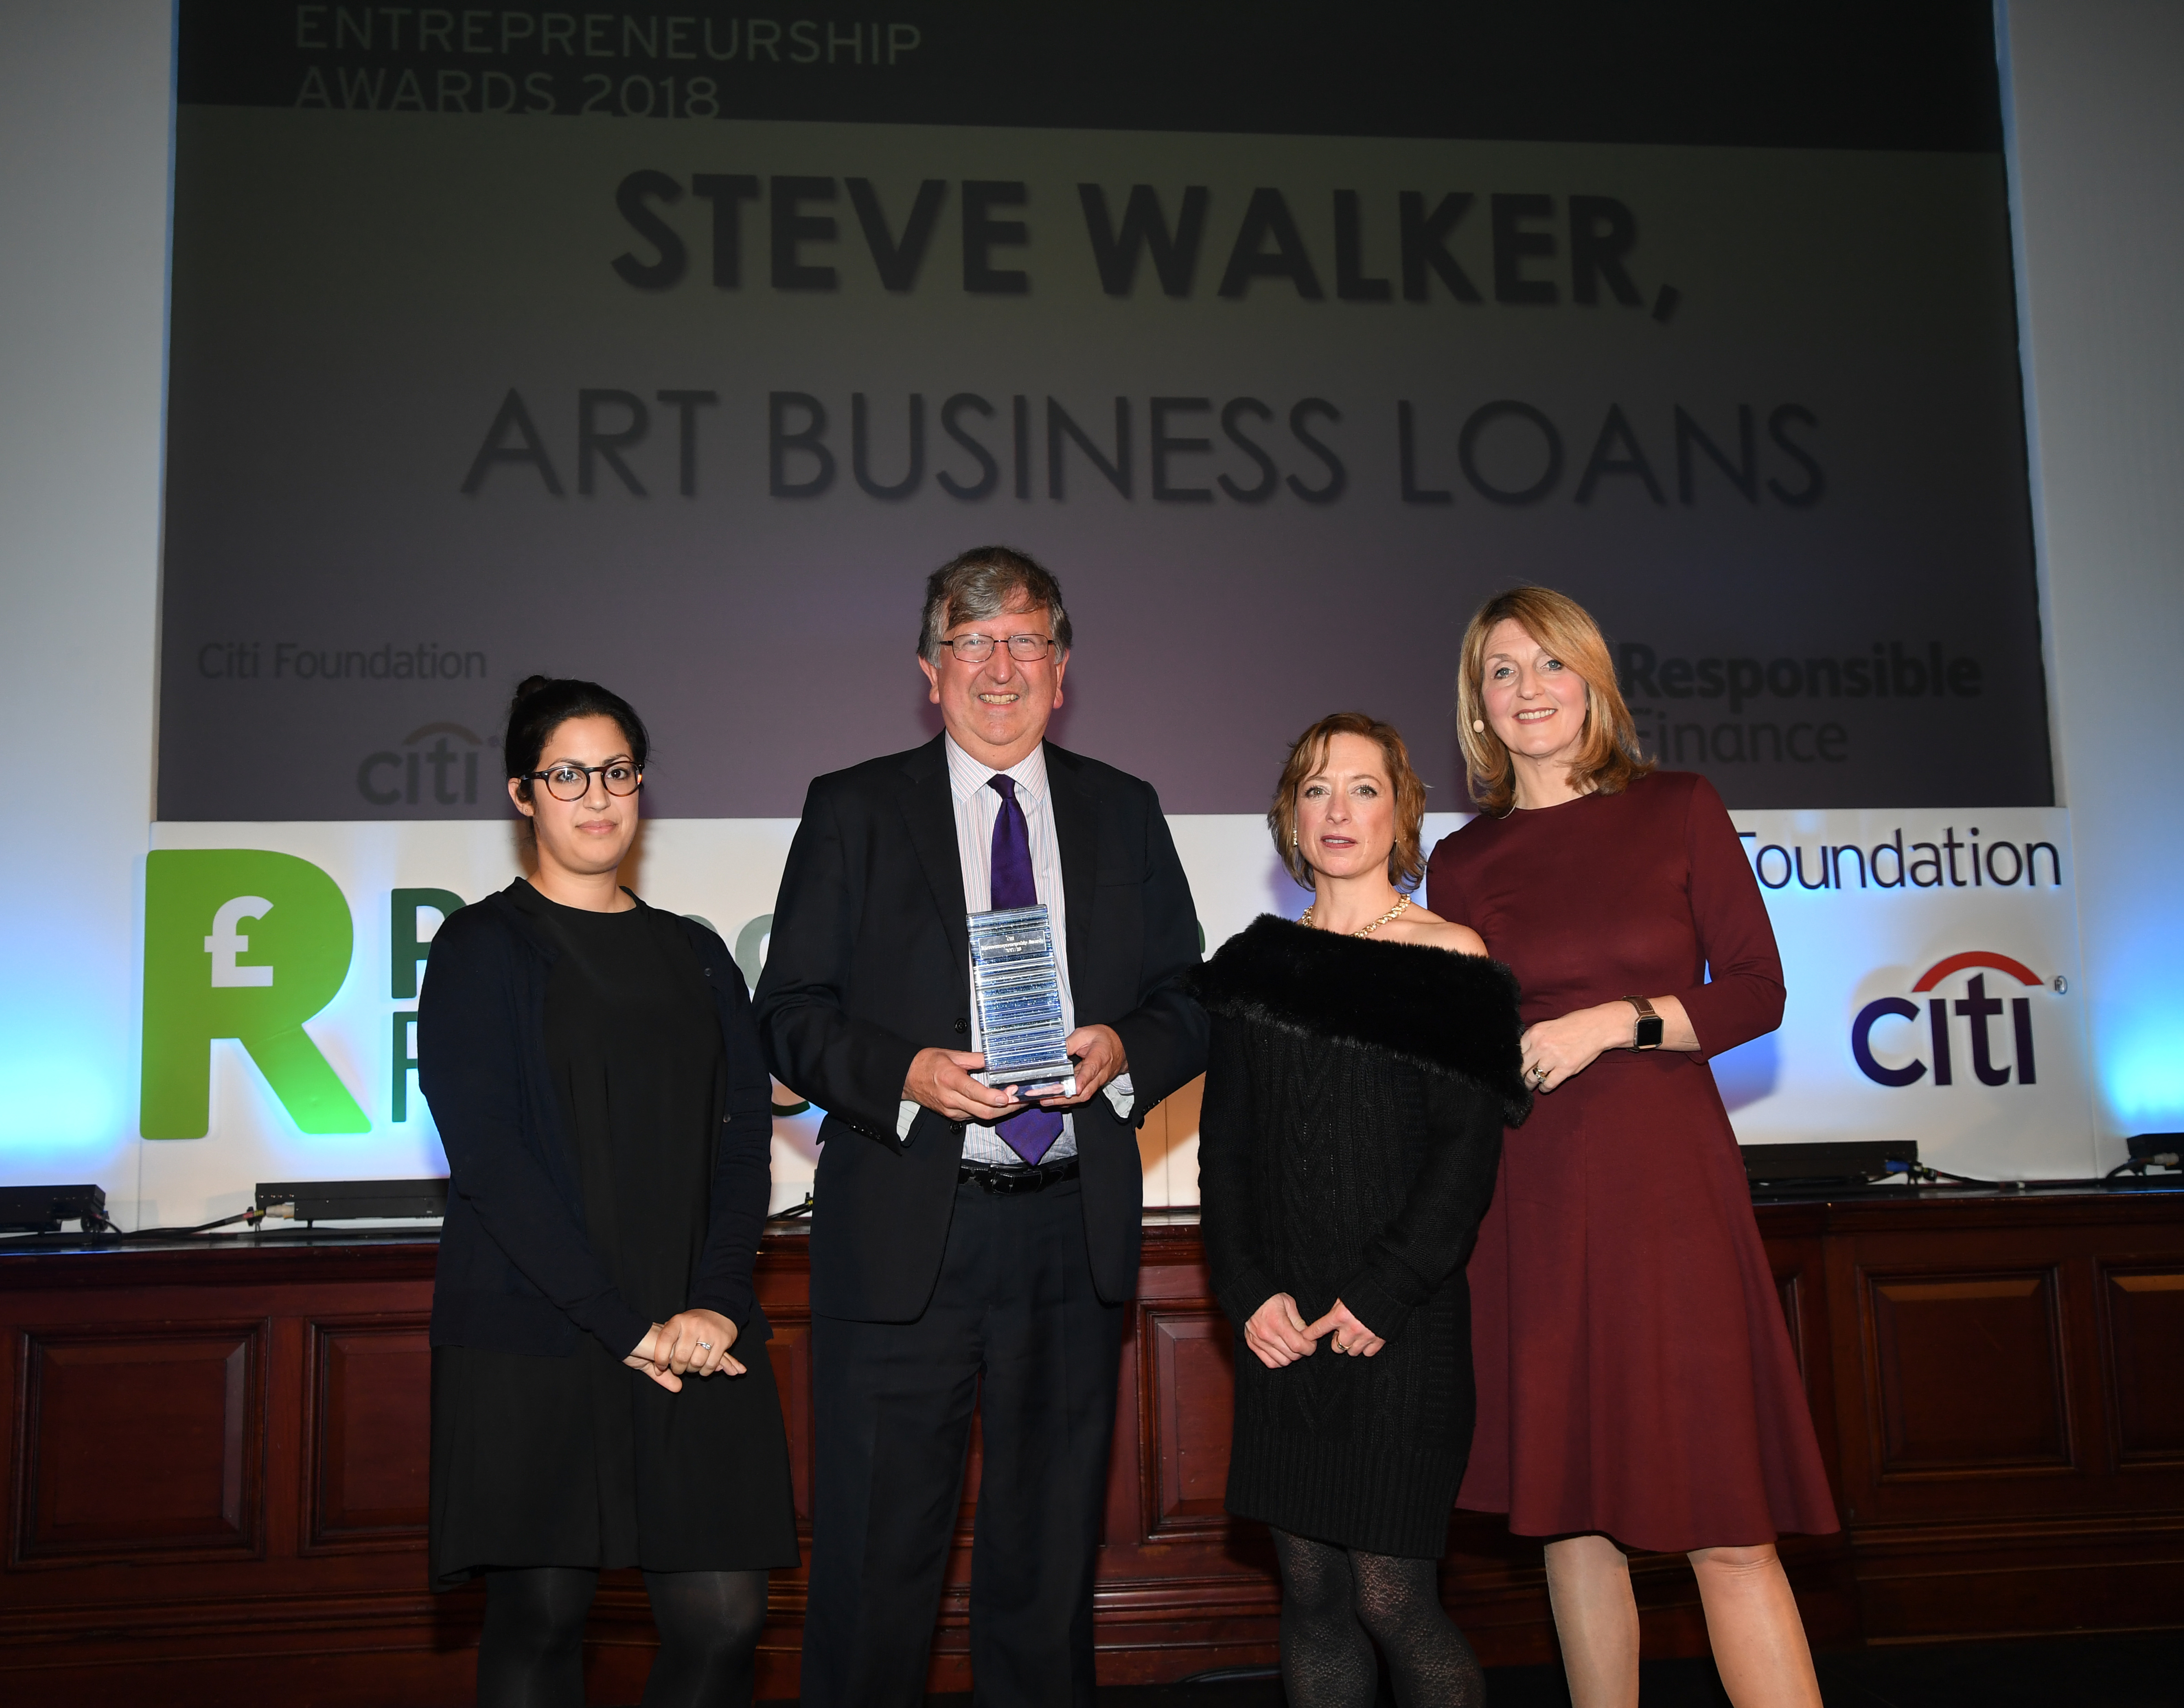 Dr Steve Walker receives Responsible Finance Leader of the Year Award 2018